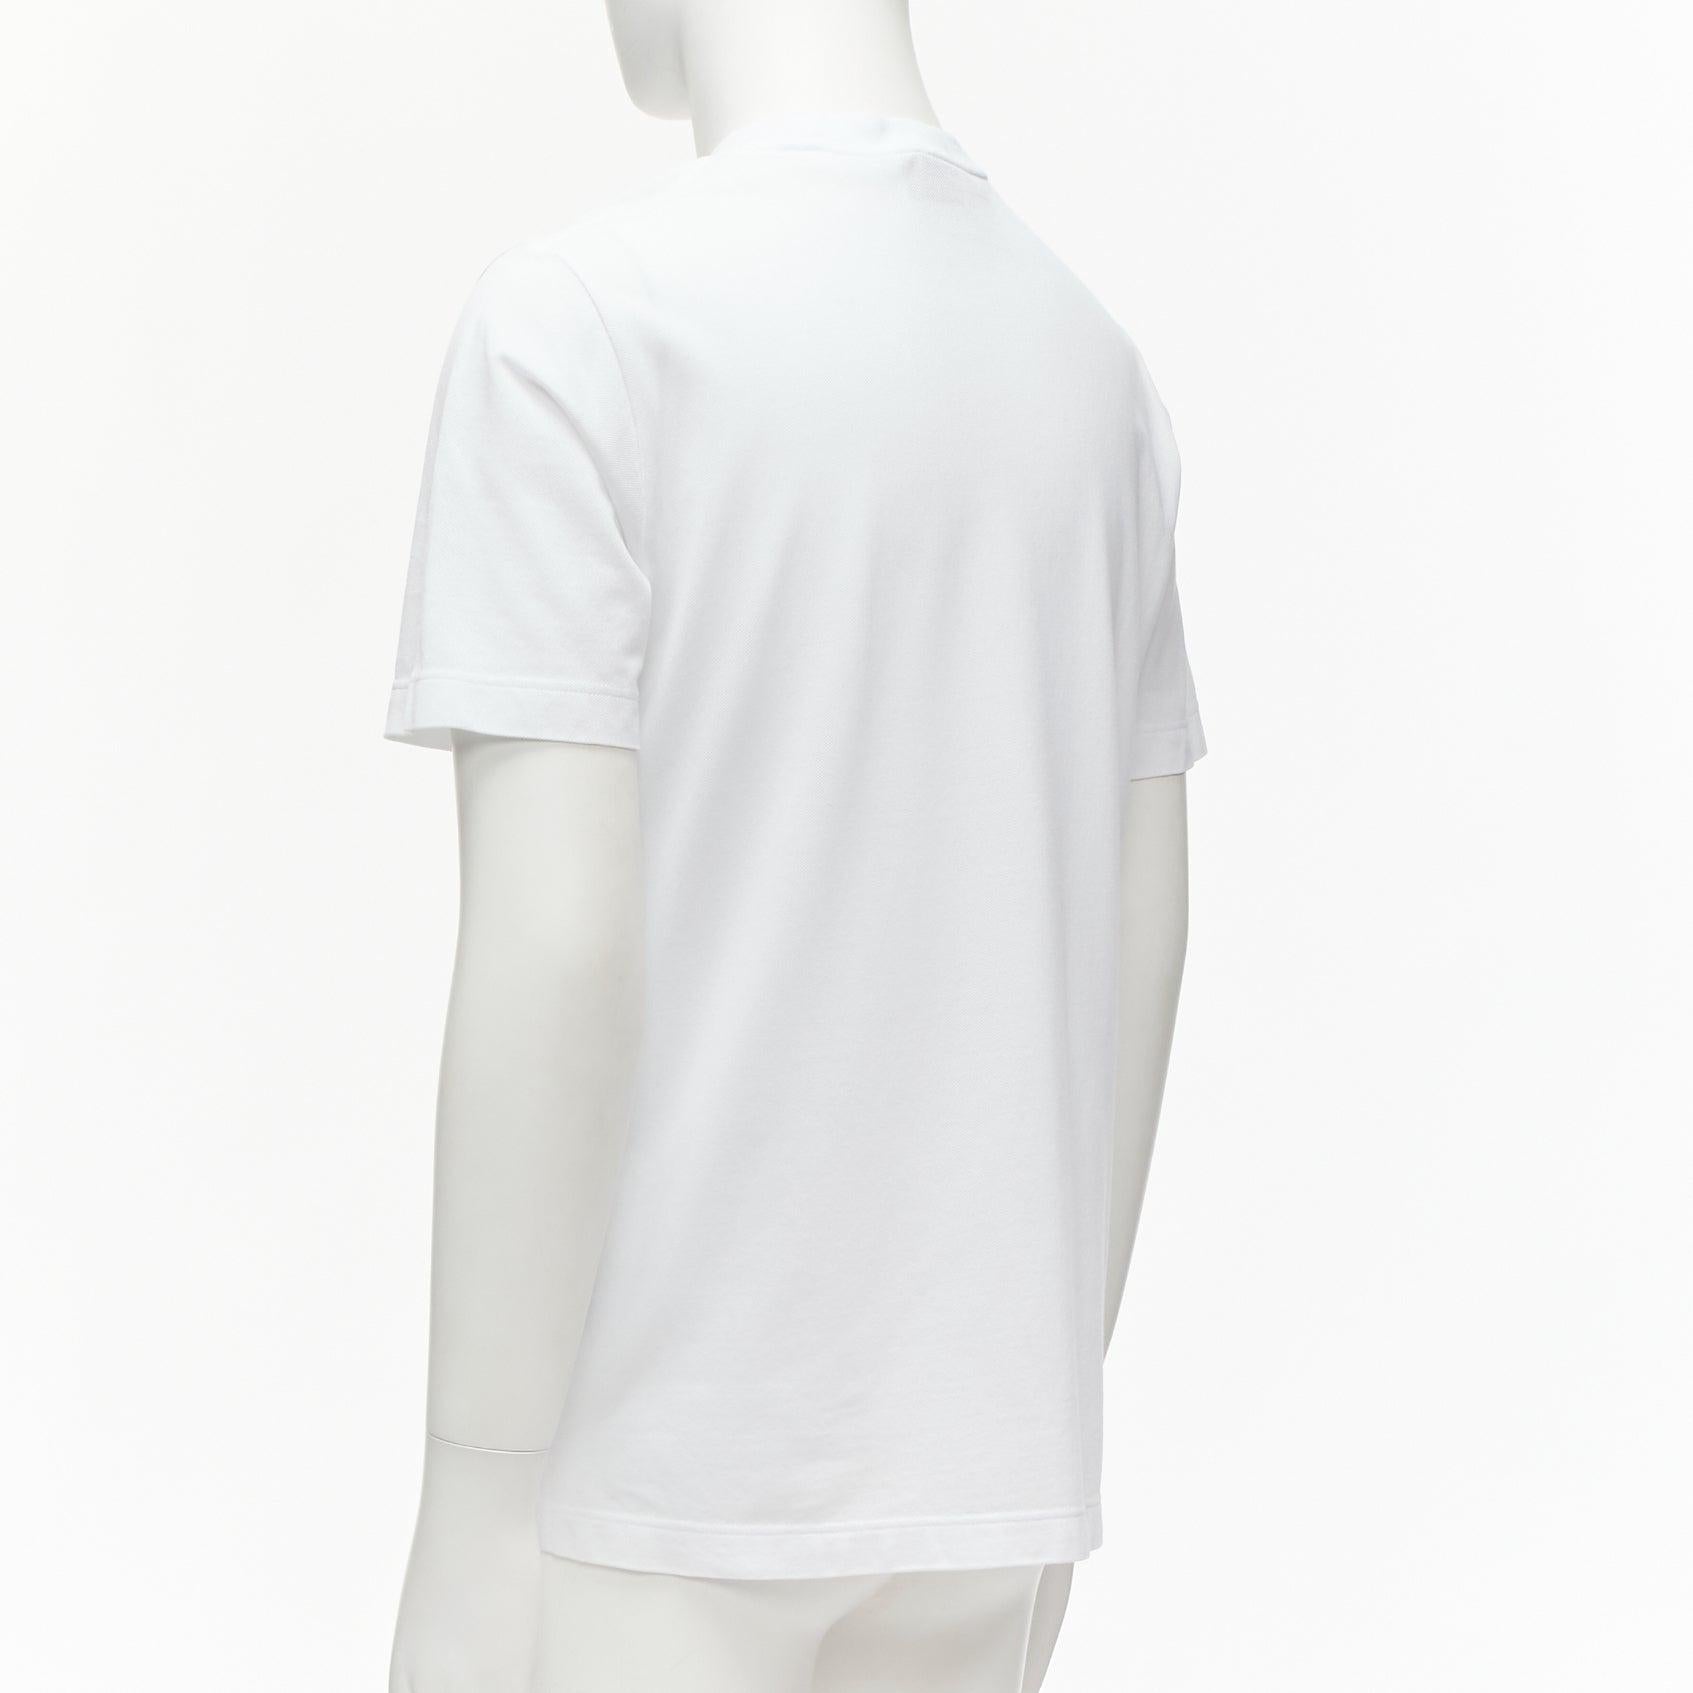 HERMES Pique H white 100% cotton logo pocket crew neck tshirt S For Sale 1